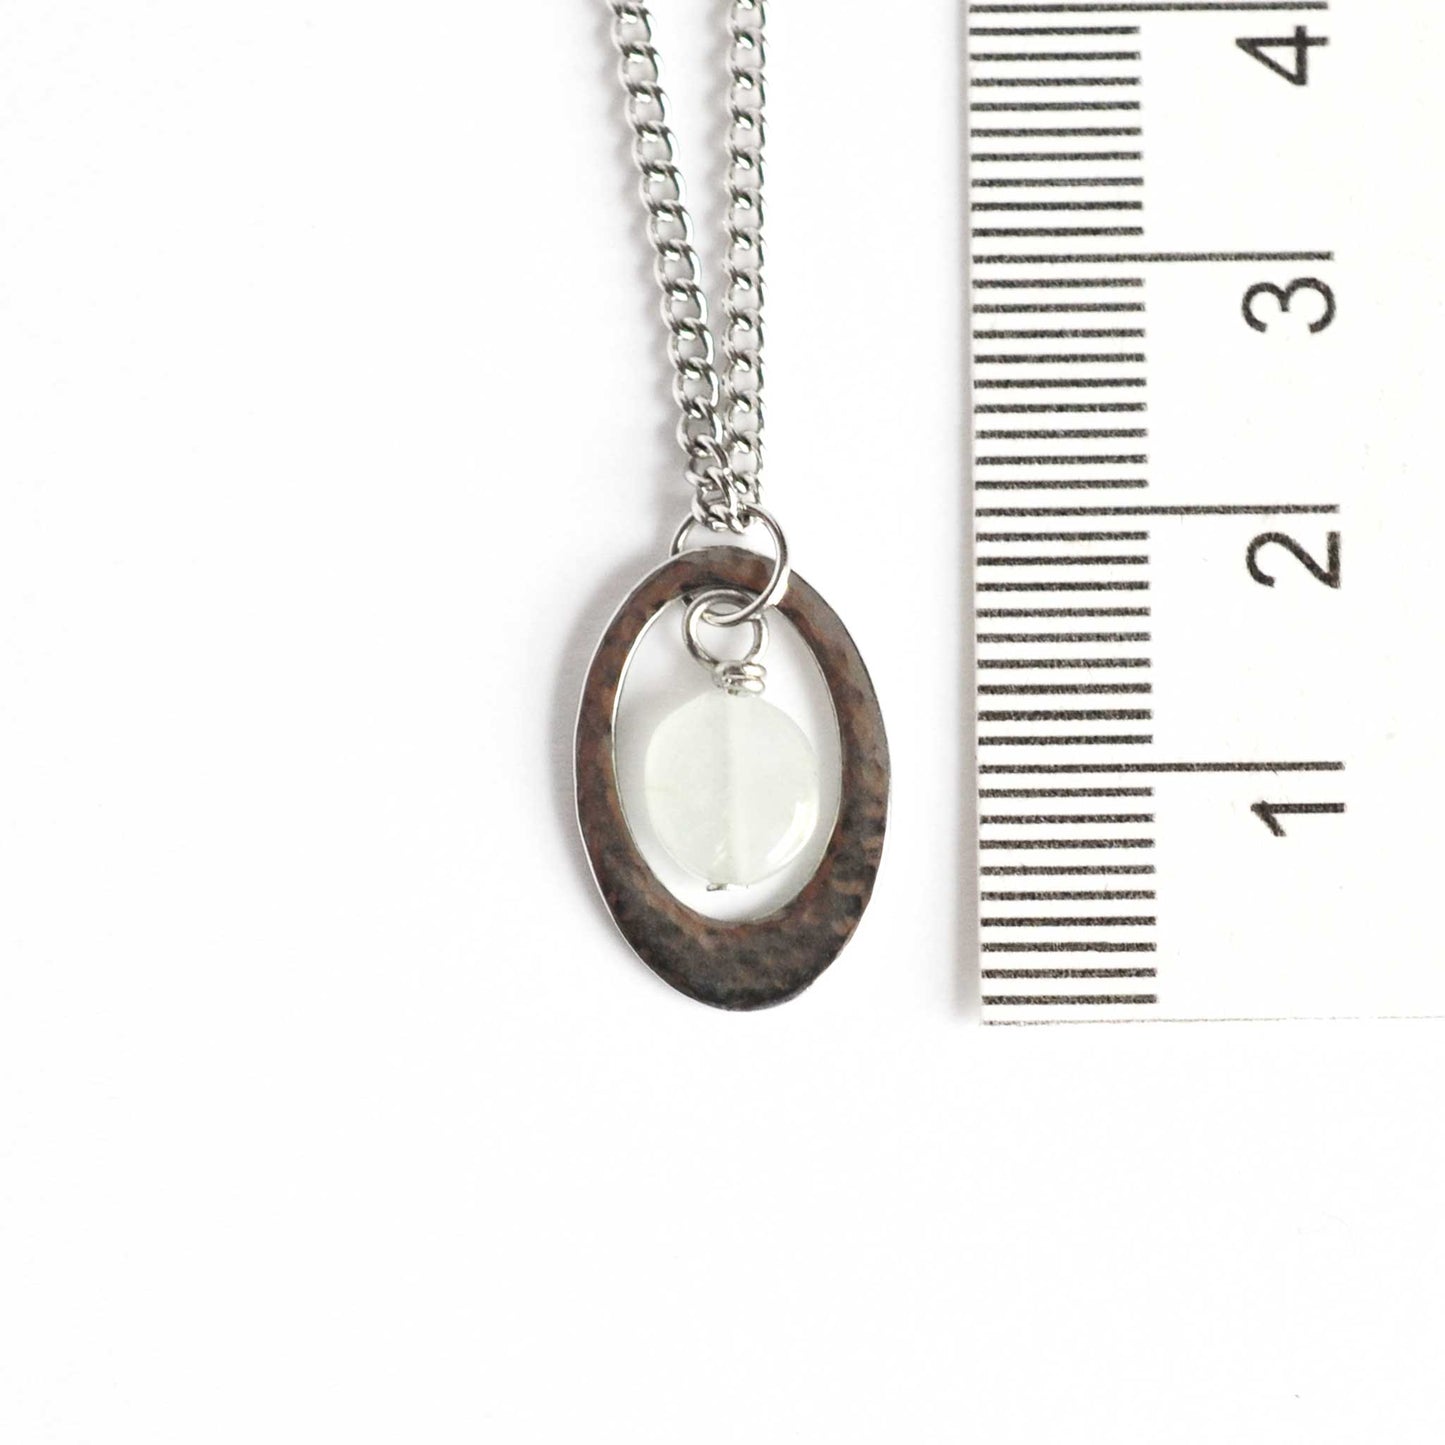 Dainty oval Aquamarine pendant necklace next to ruler.